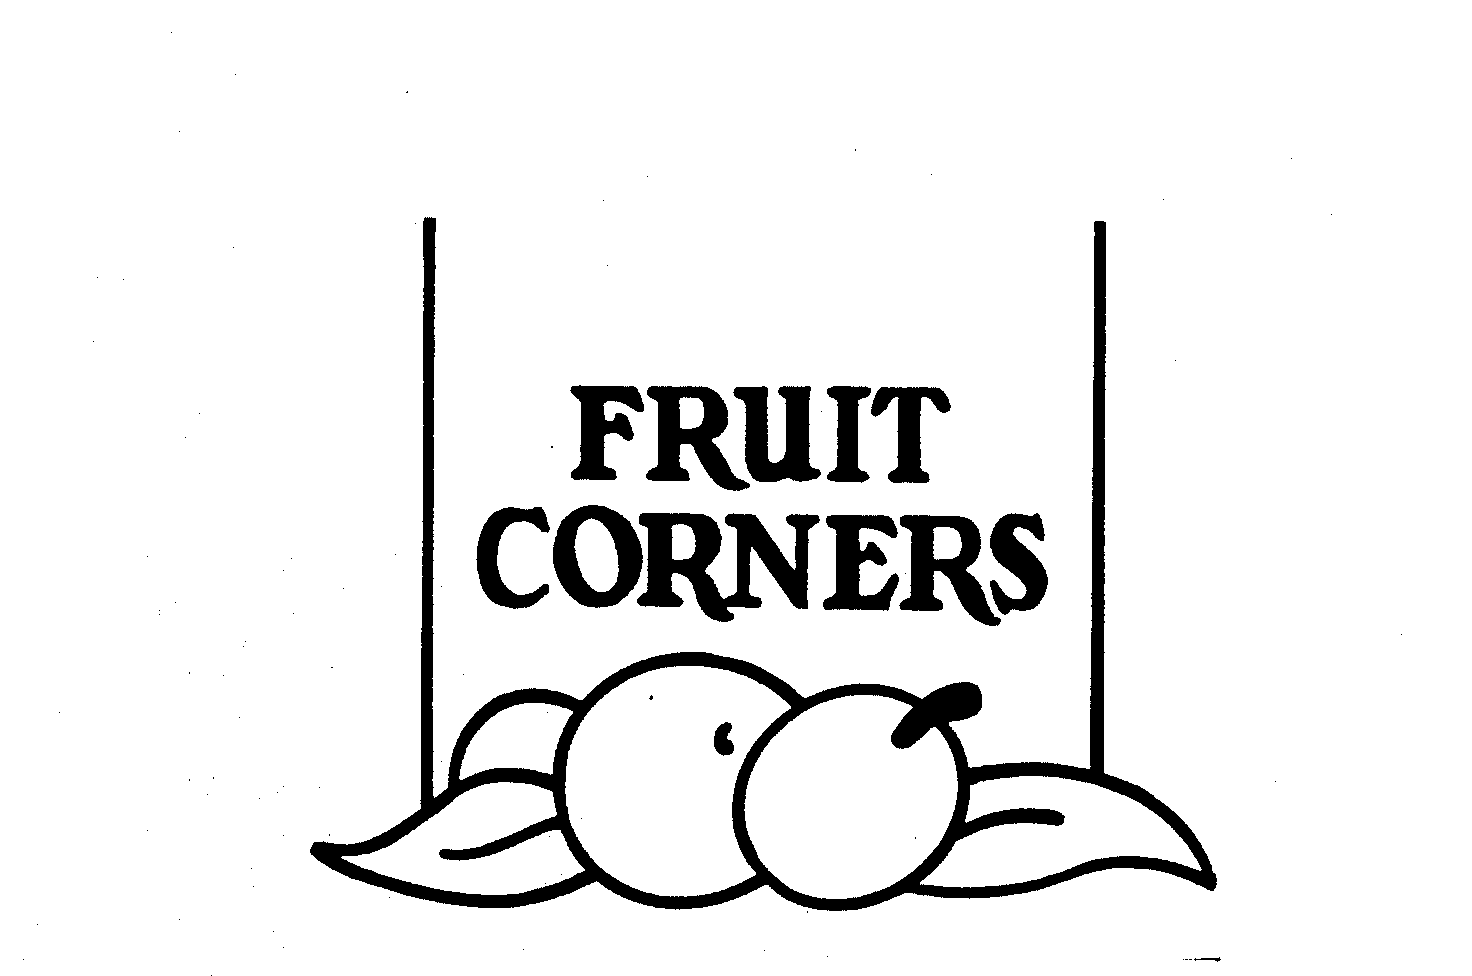  FRUIT CORNERS